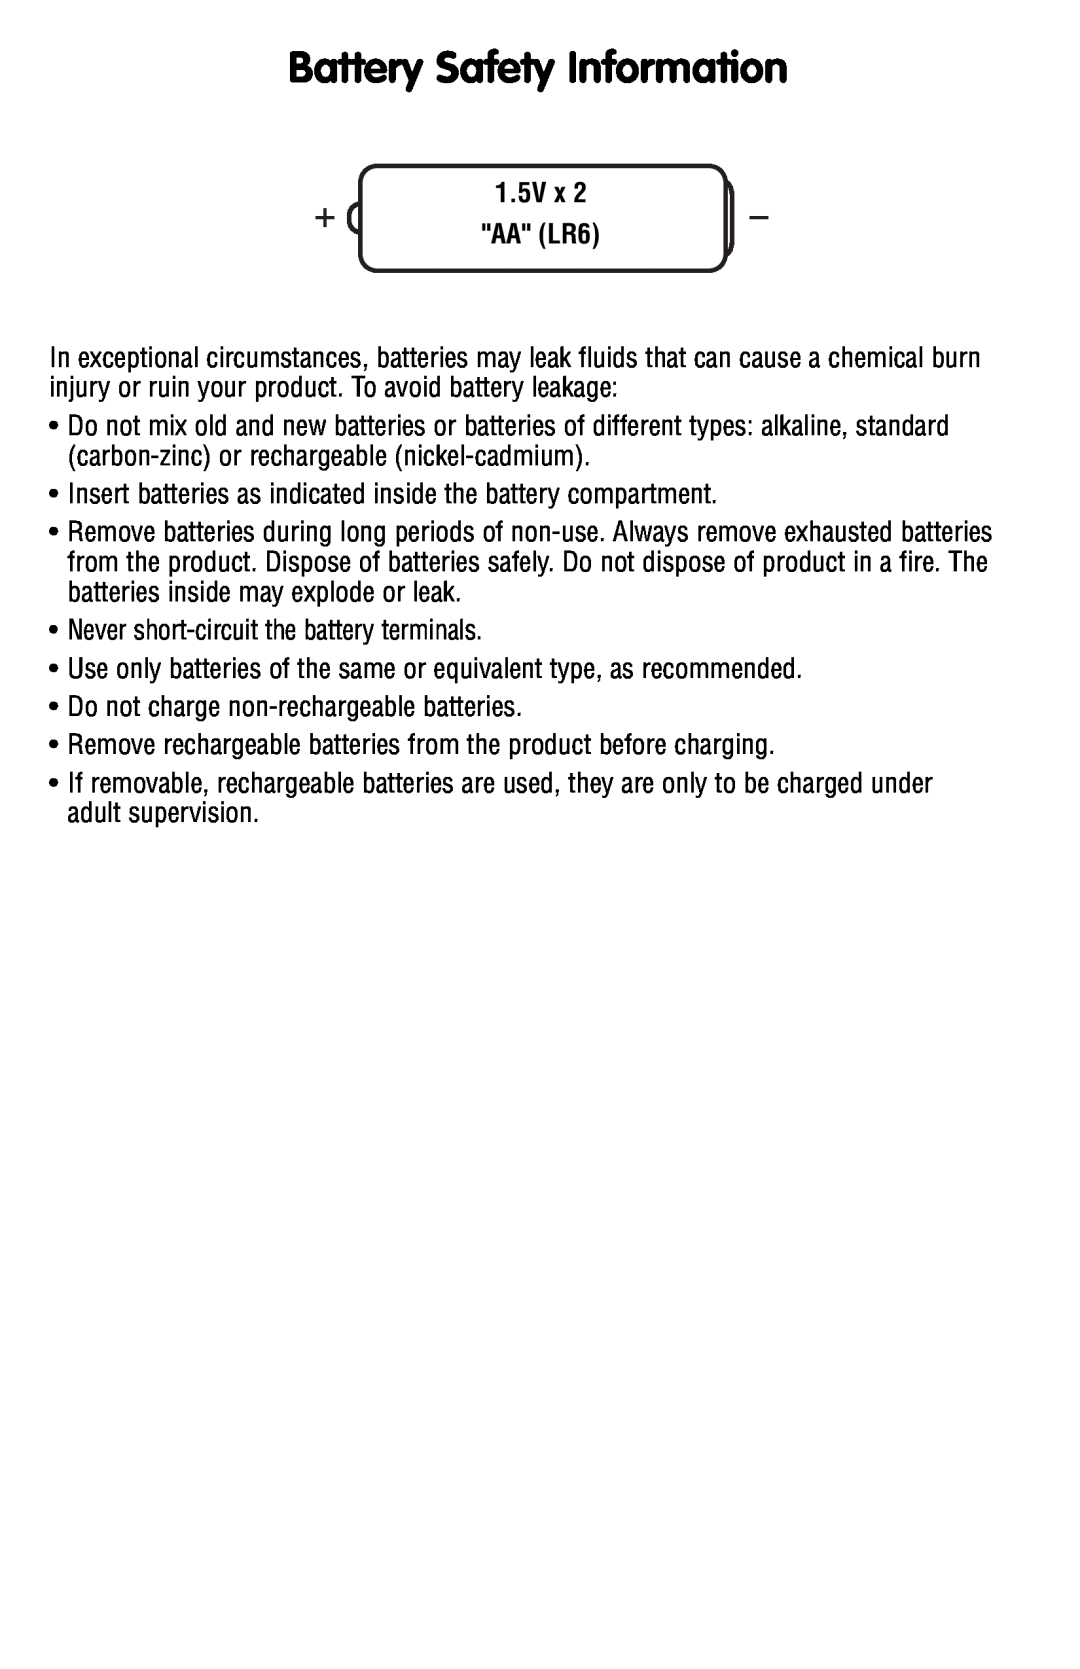 Fisher-Price N7121 instruction sheet Battery Safety Information, 1.5V x AA LR6 